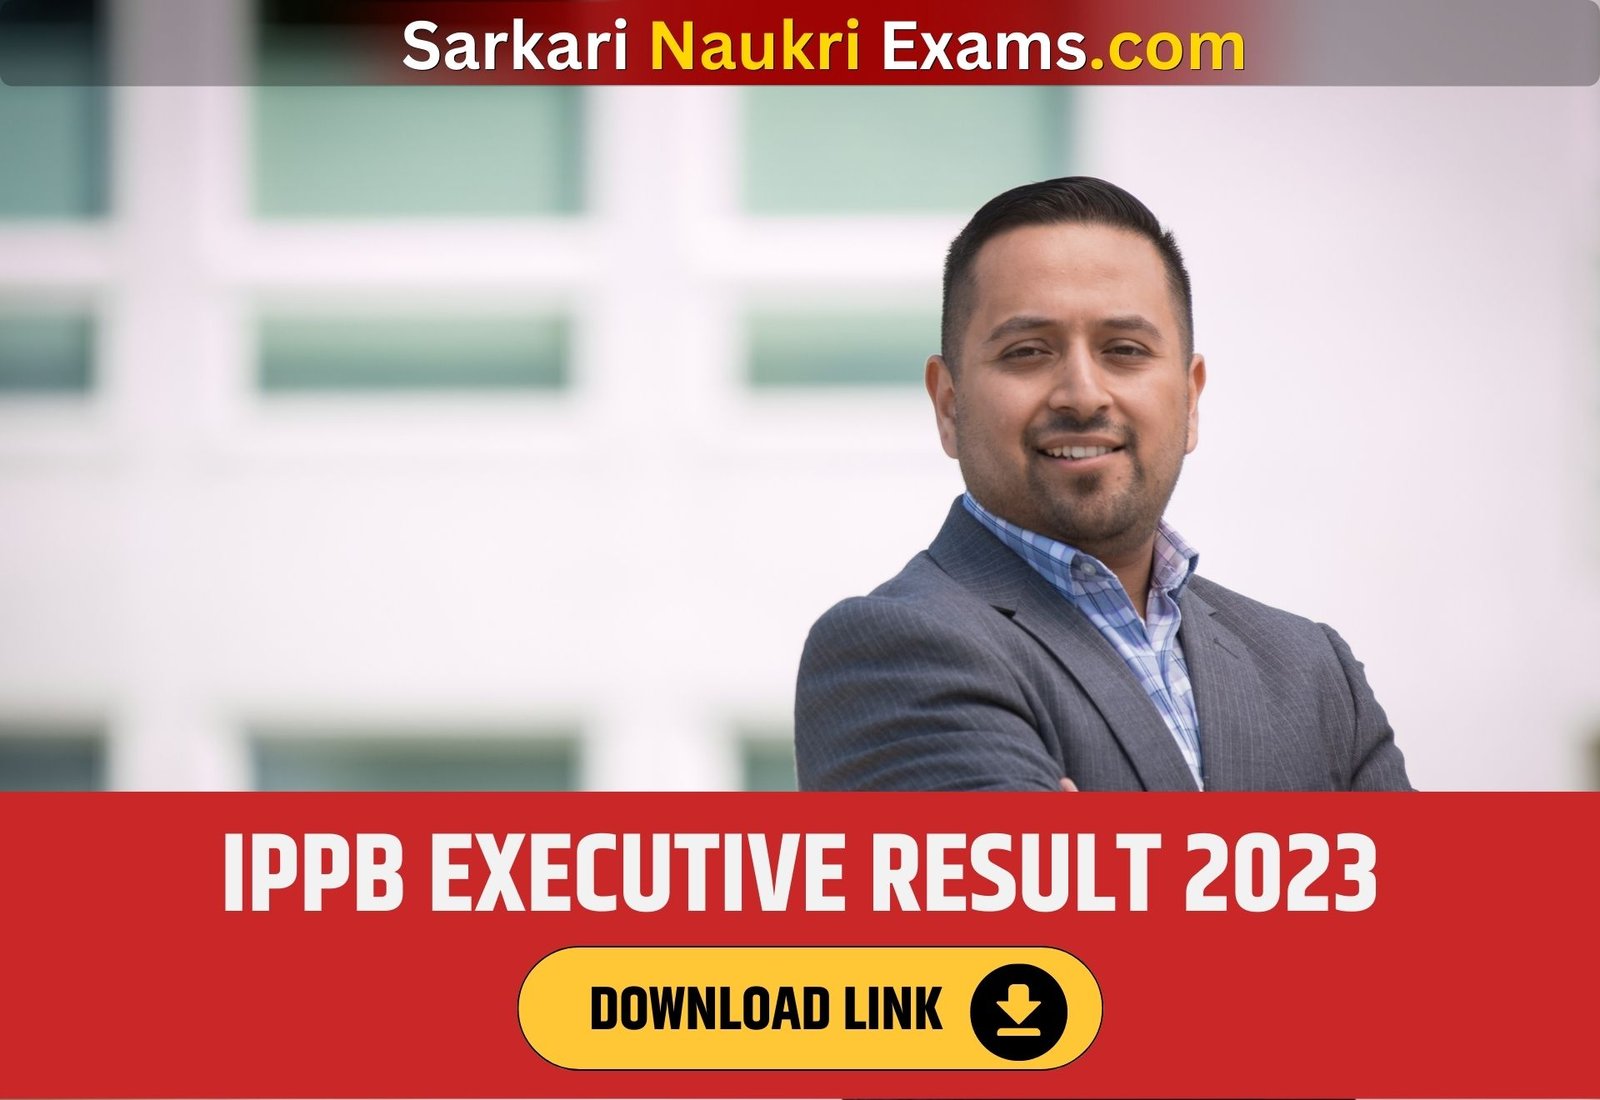 IPPB Executive Result 2023 | Download Link, Merit List